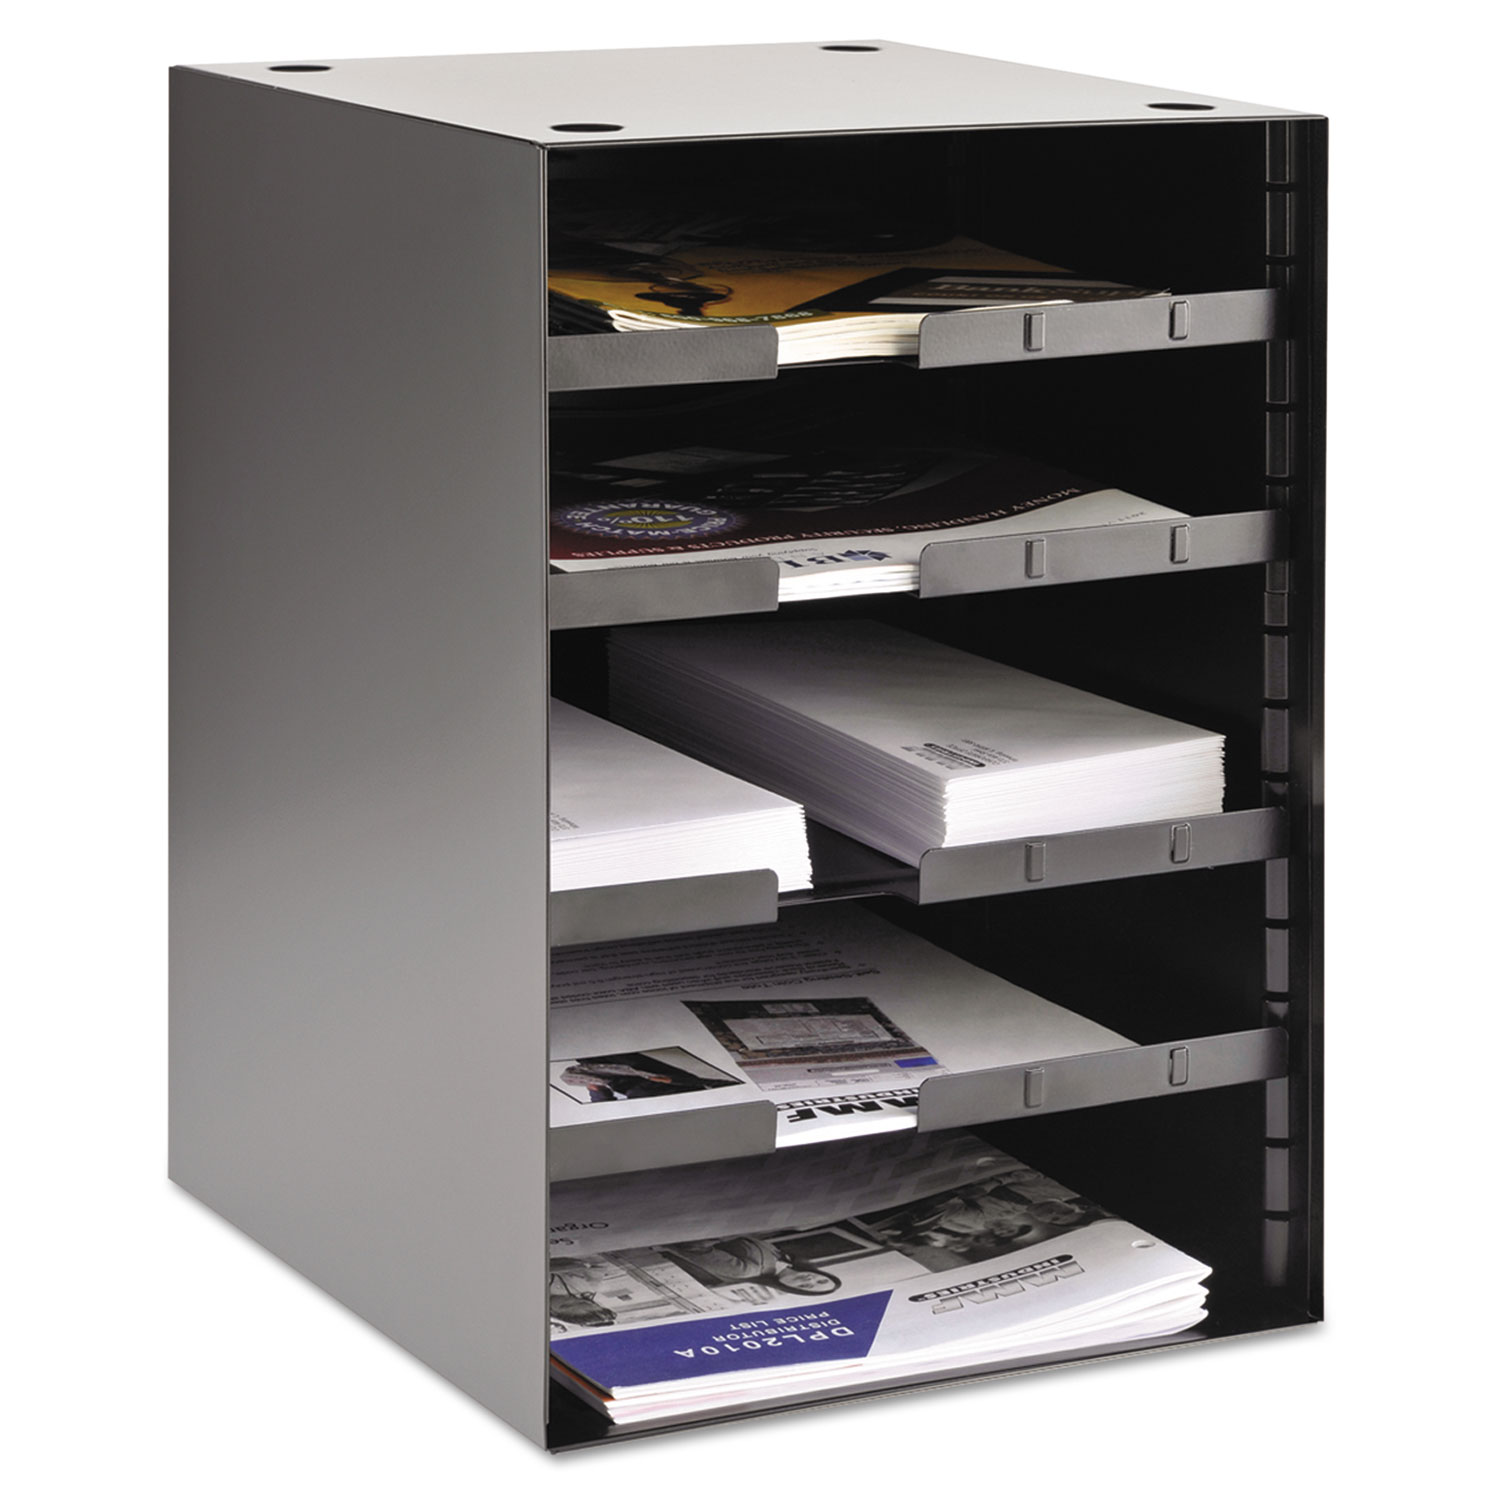 Steel Desktop Sorter, Four Adjustable Shelves, 11 1/2 x 12 x 19, Black